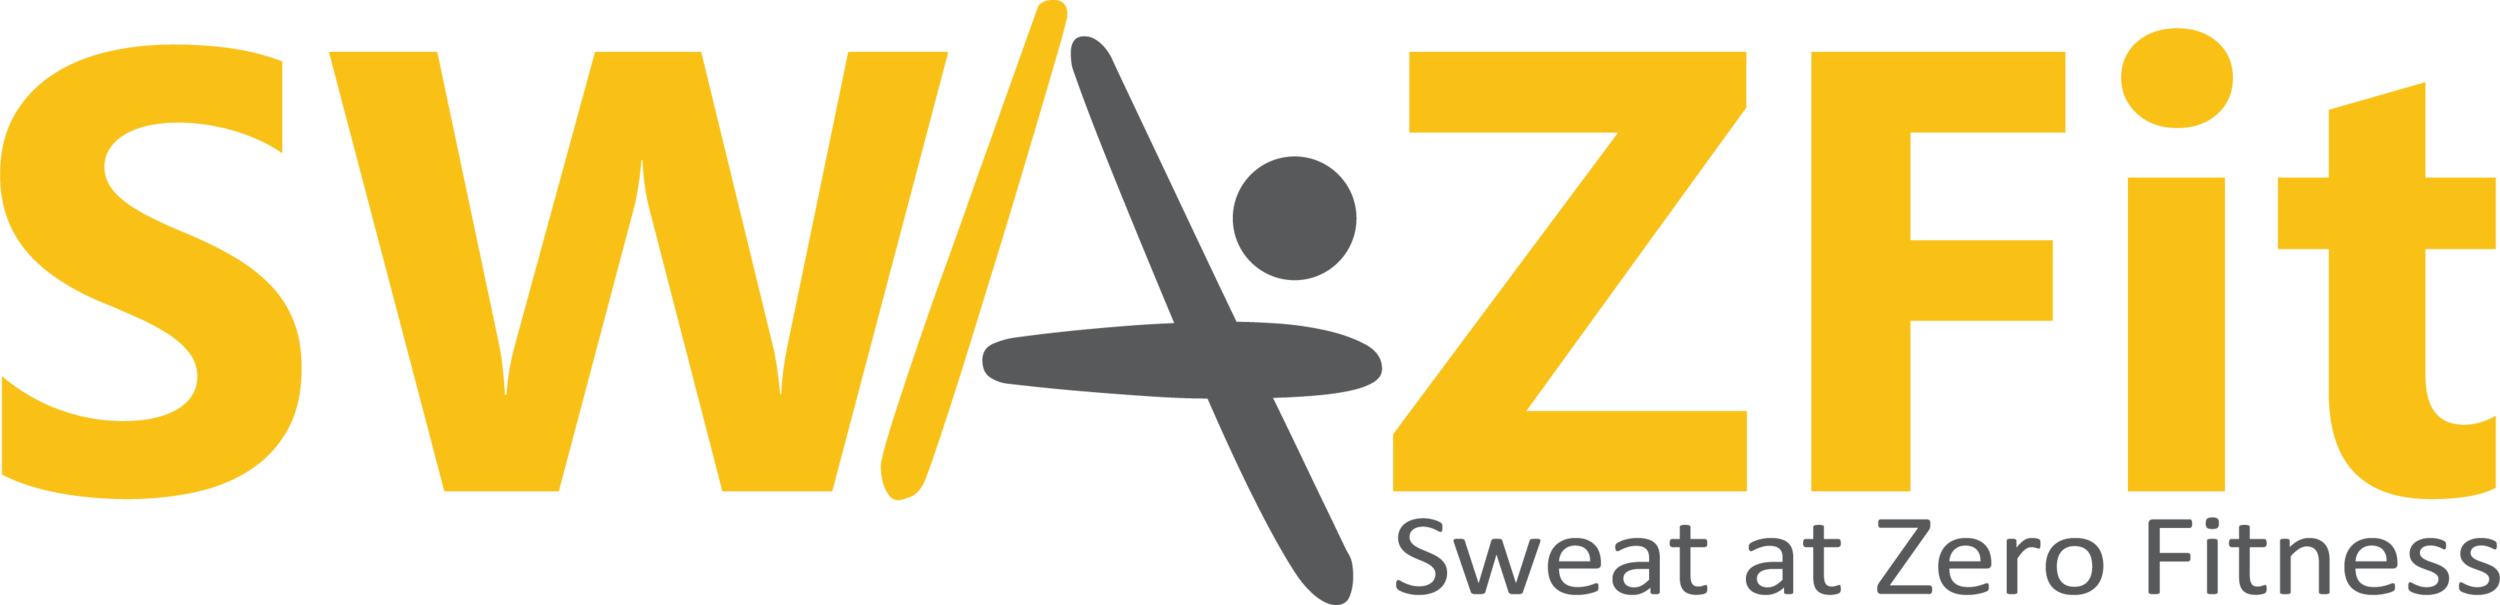 SWAZ Fitness and Wellness